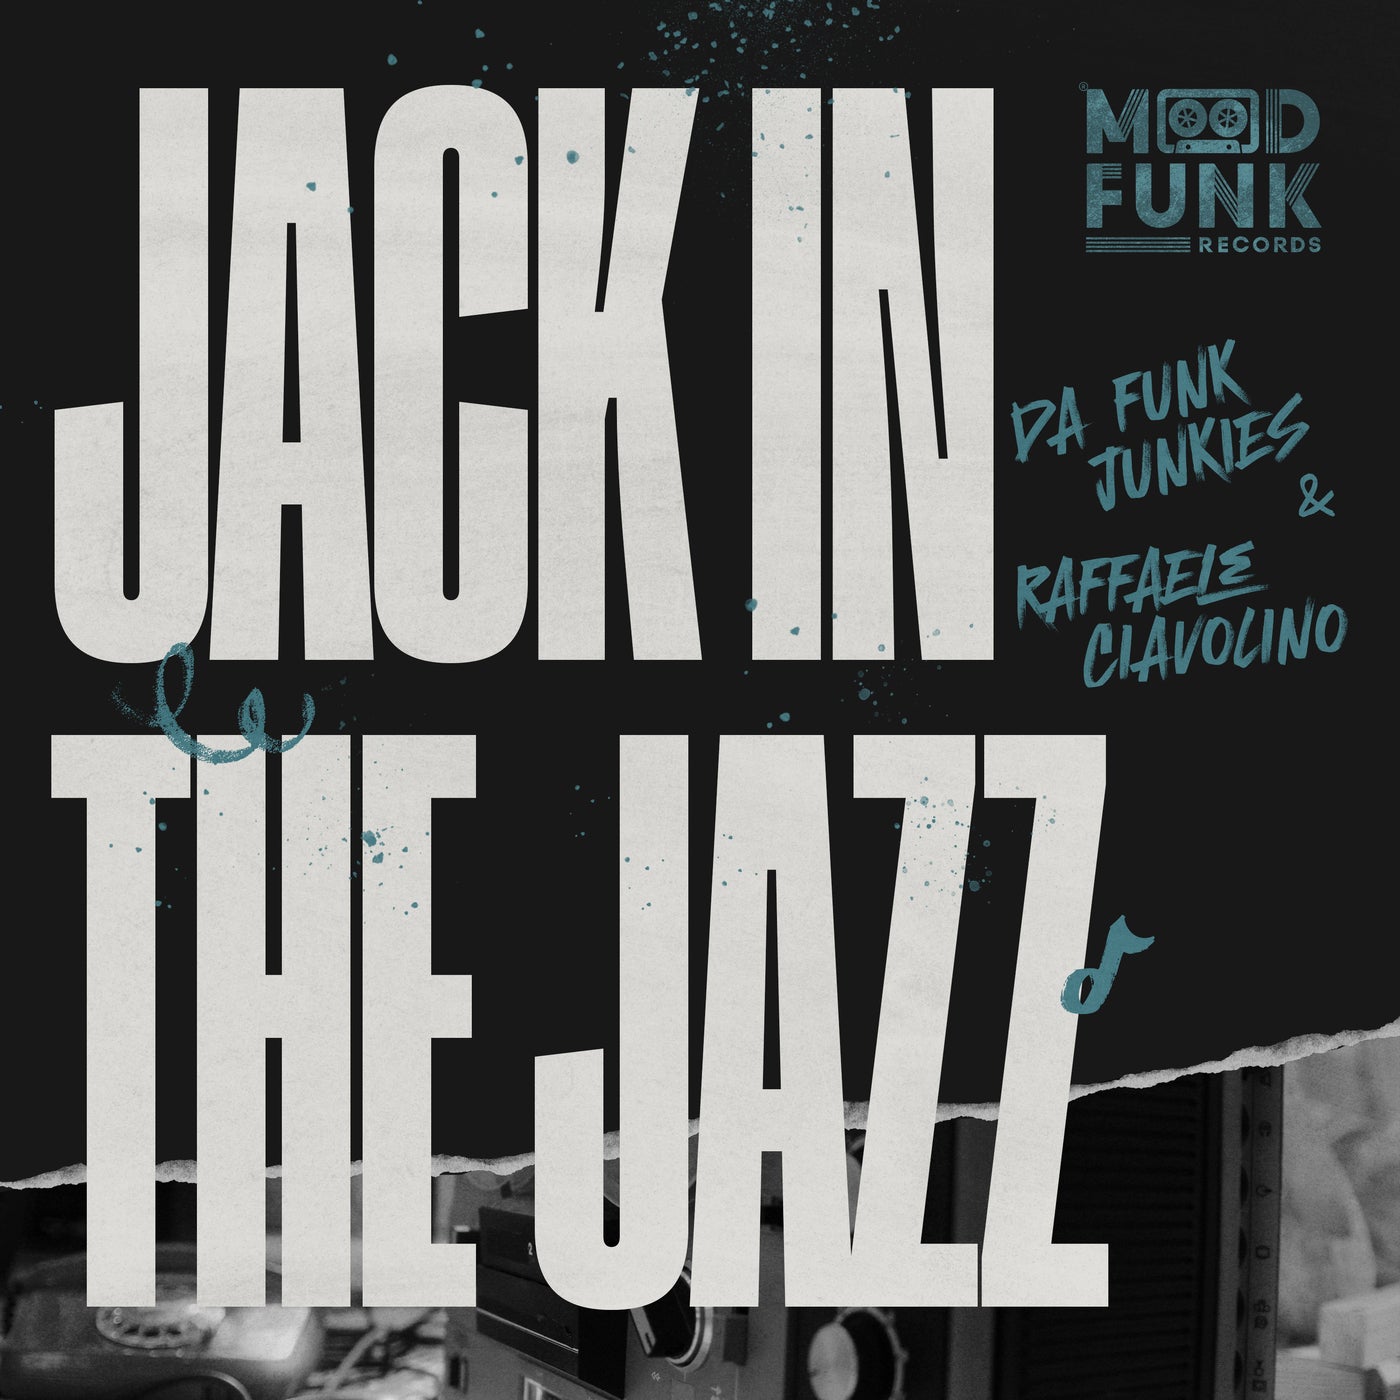 Jack In The Jazz